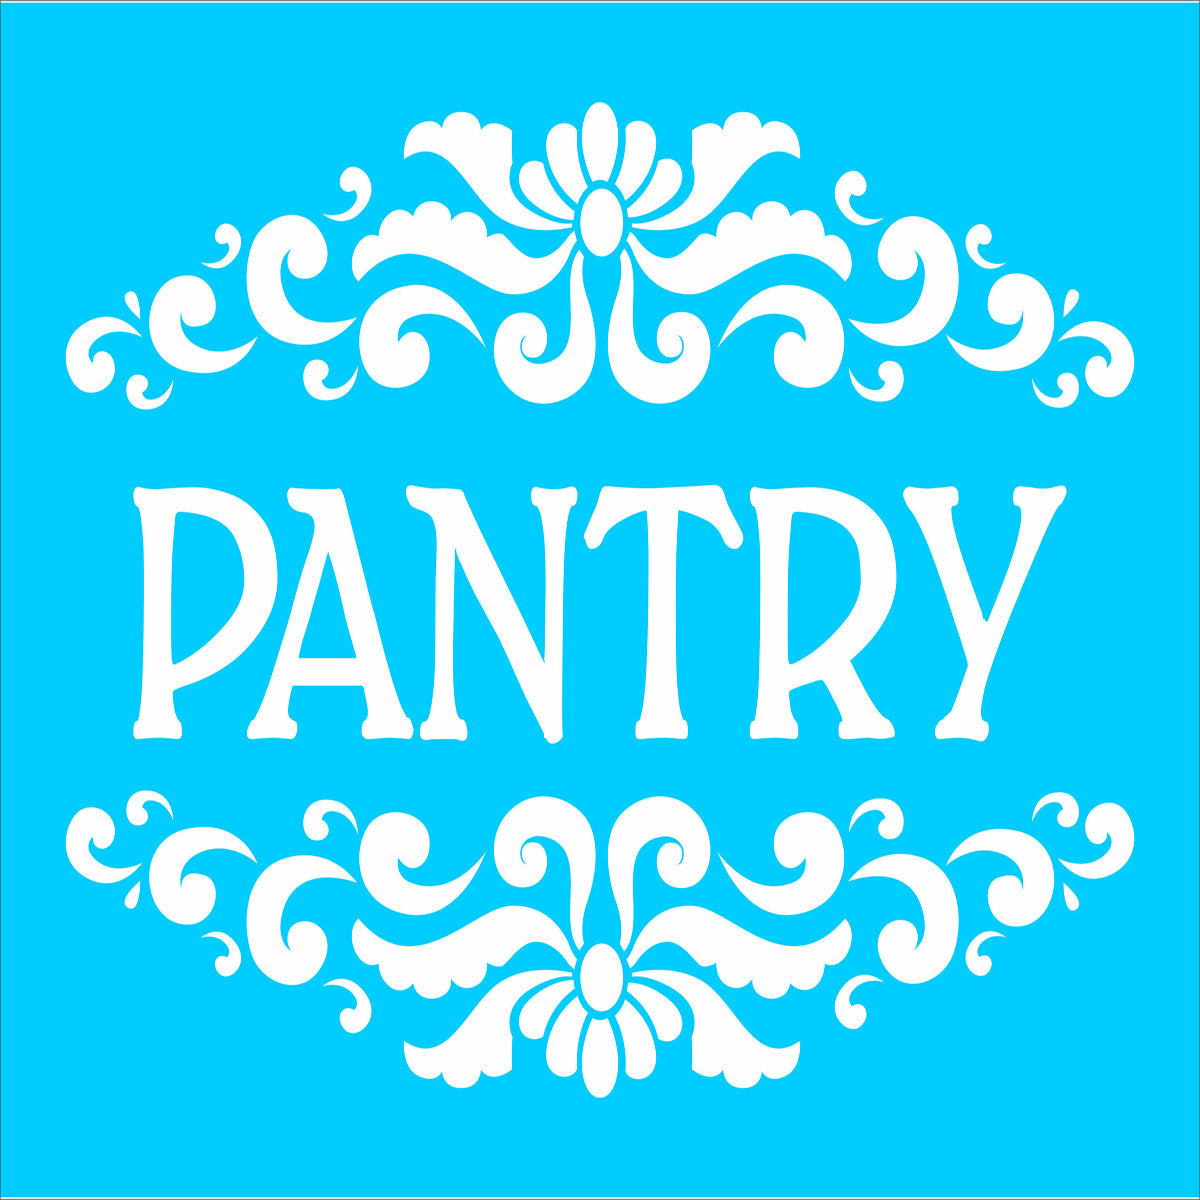 Pantry Stencil Kitchen Stencil or Laundry Stencil - Superior Stencils